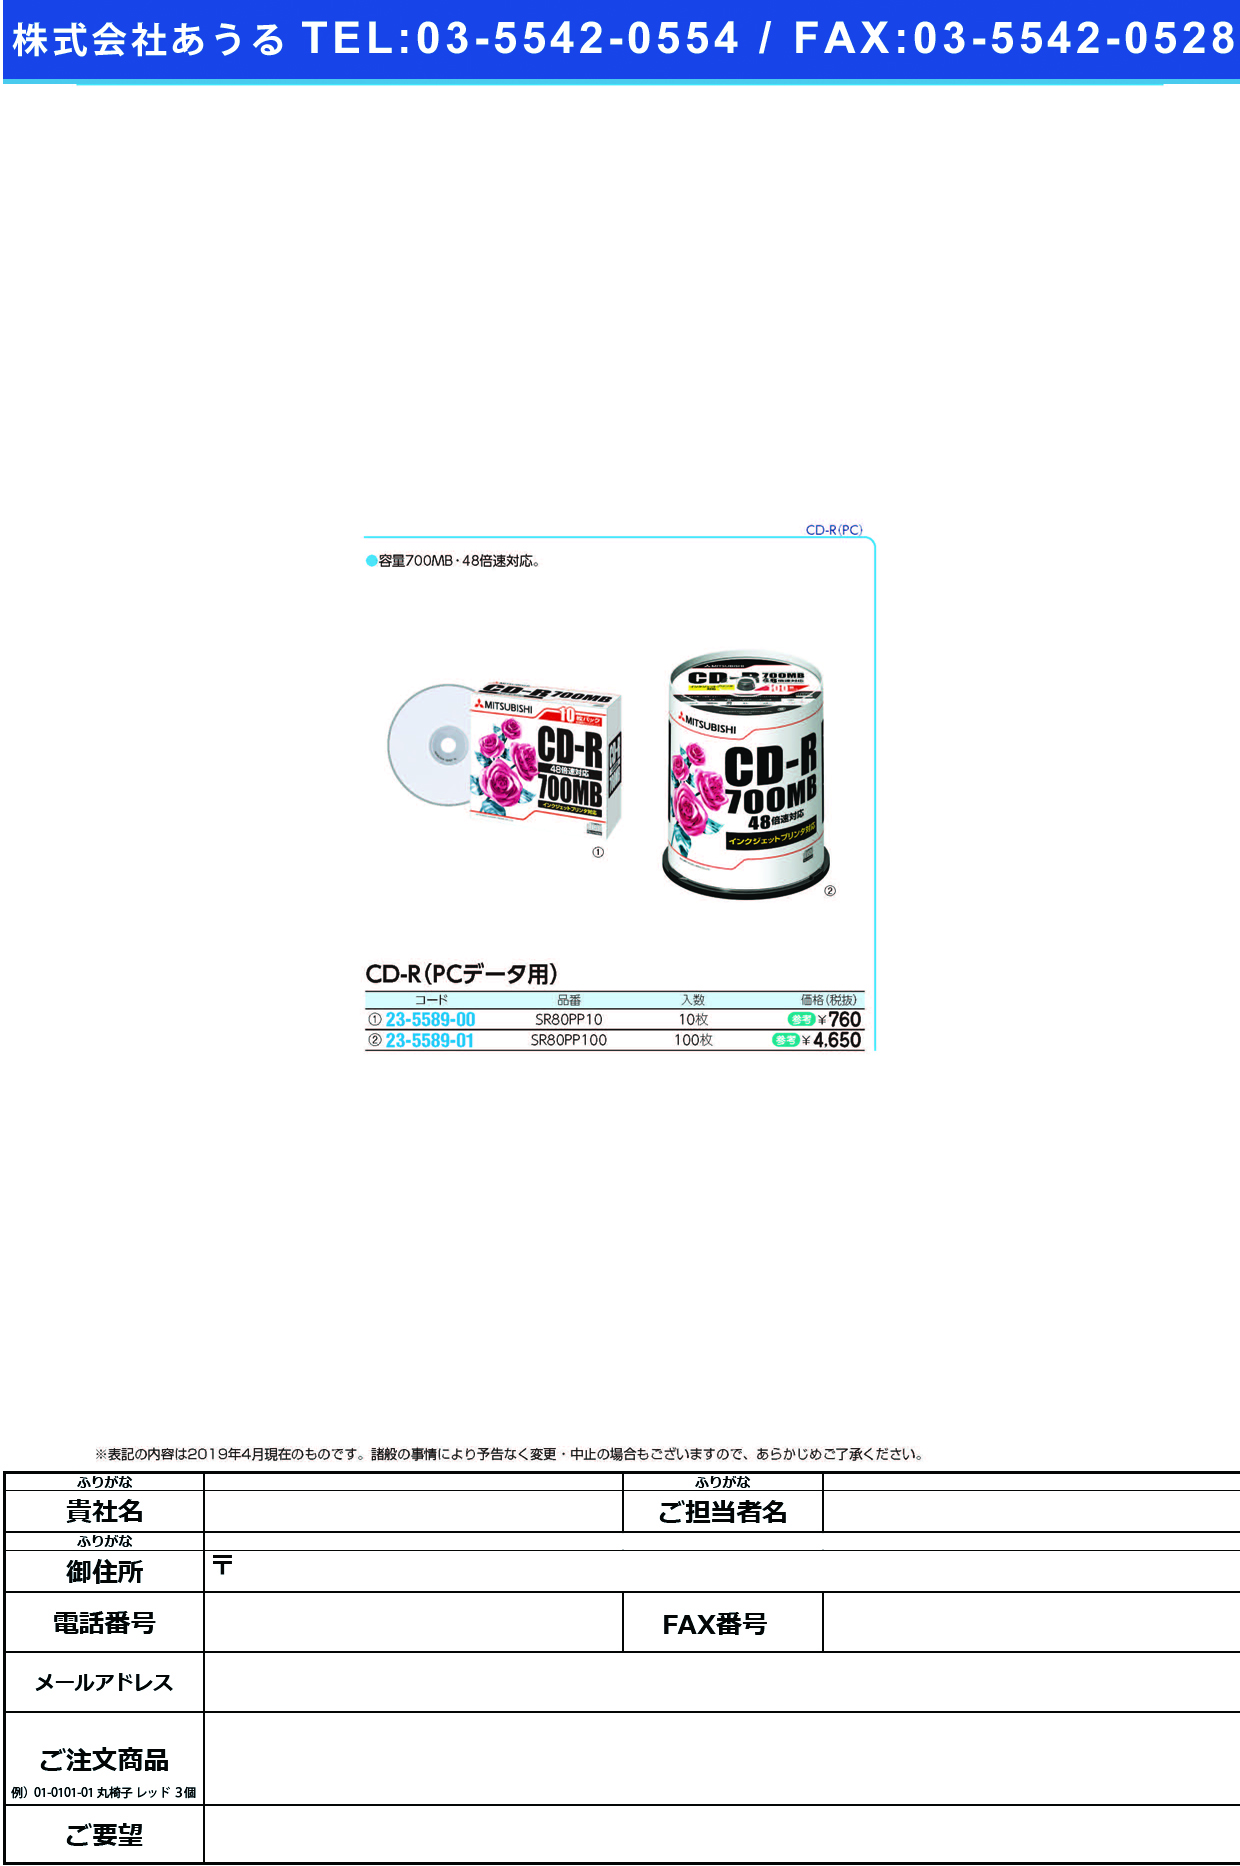 (23-5589-01)ＰＣデータ用ＣＤ−Ｒ SR80PP100(100ﾏｲ) PCﾃﾞｰﾀﾖｳCD-R【1包単位】【2019年カタログ商品】